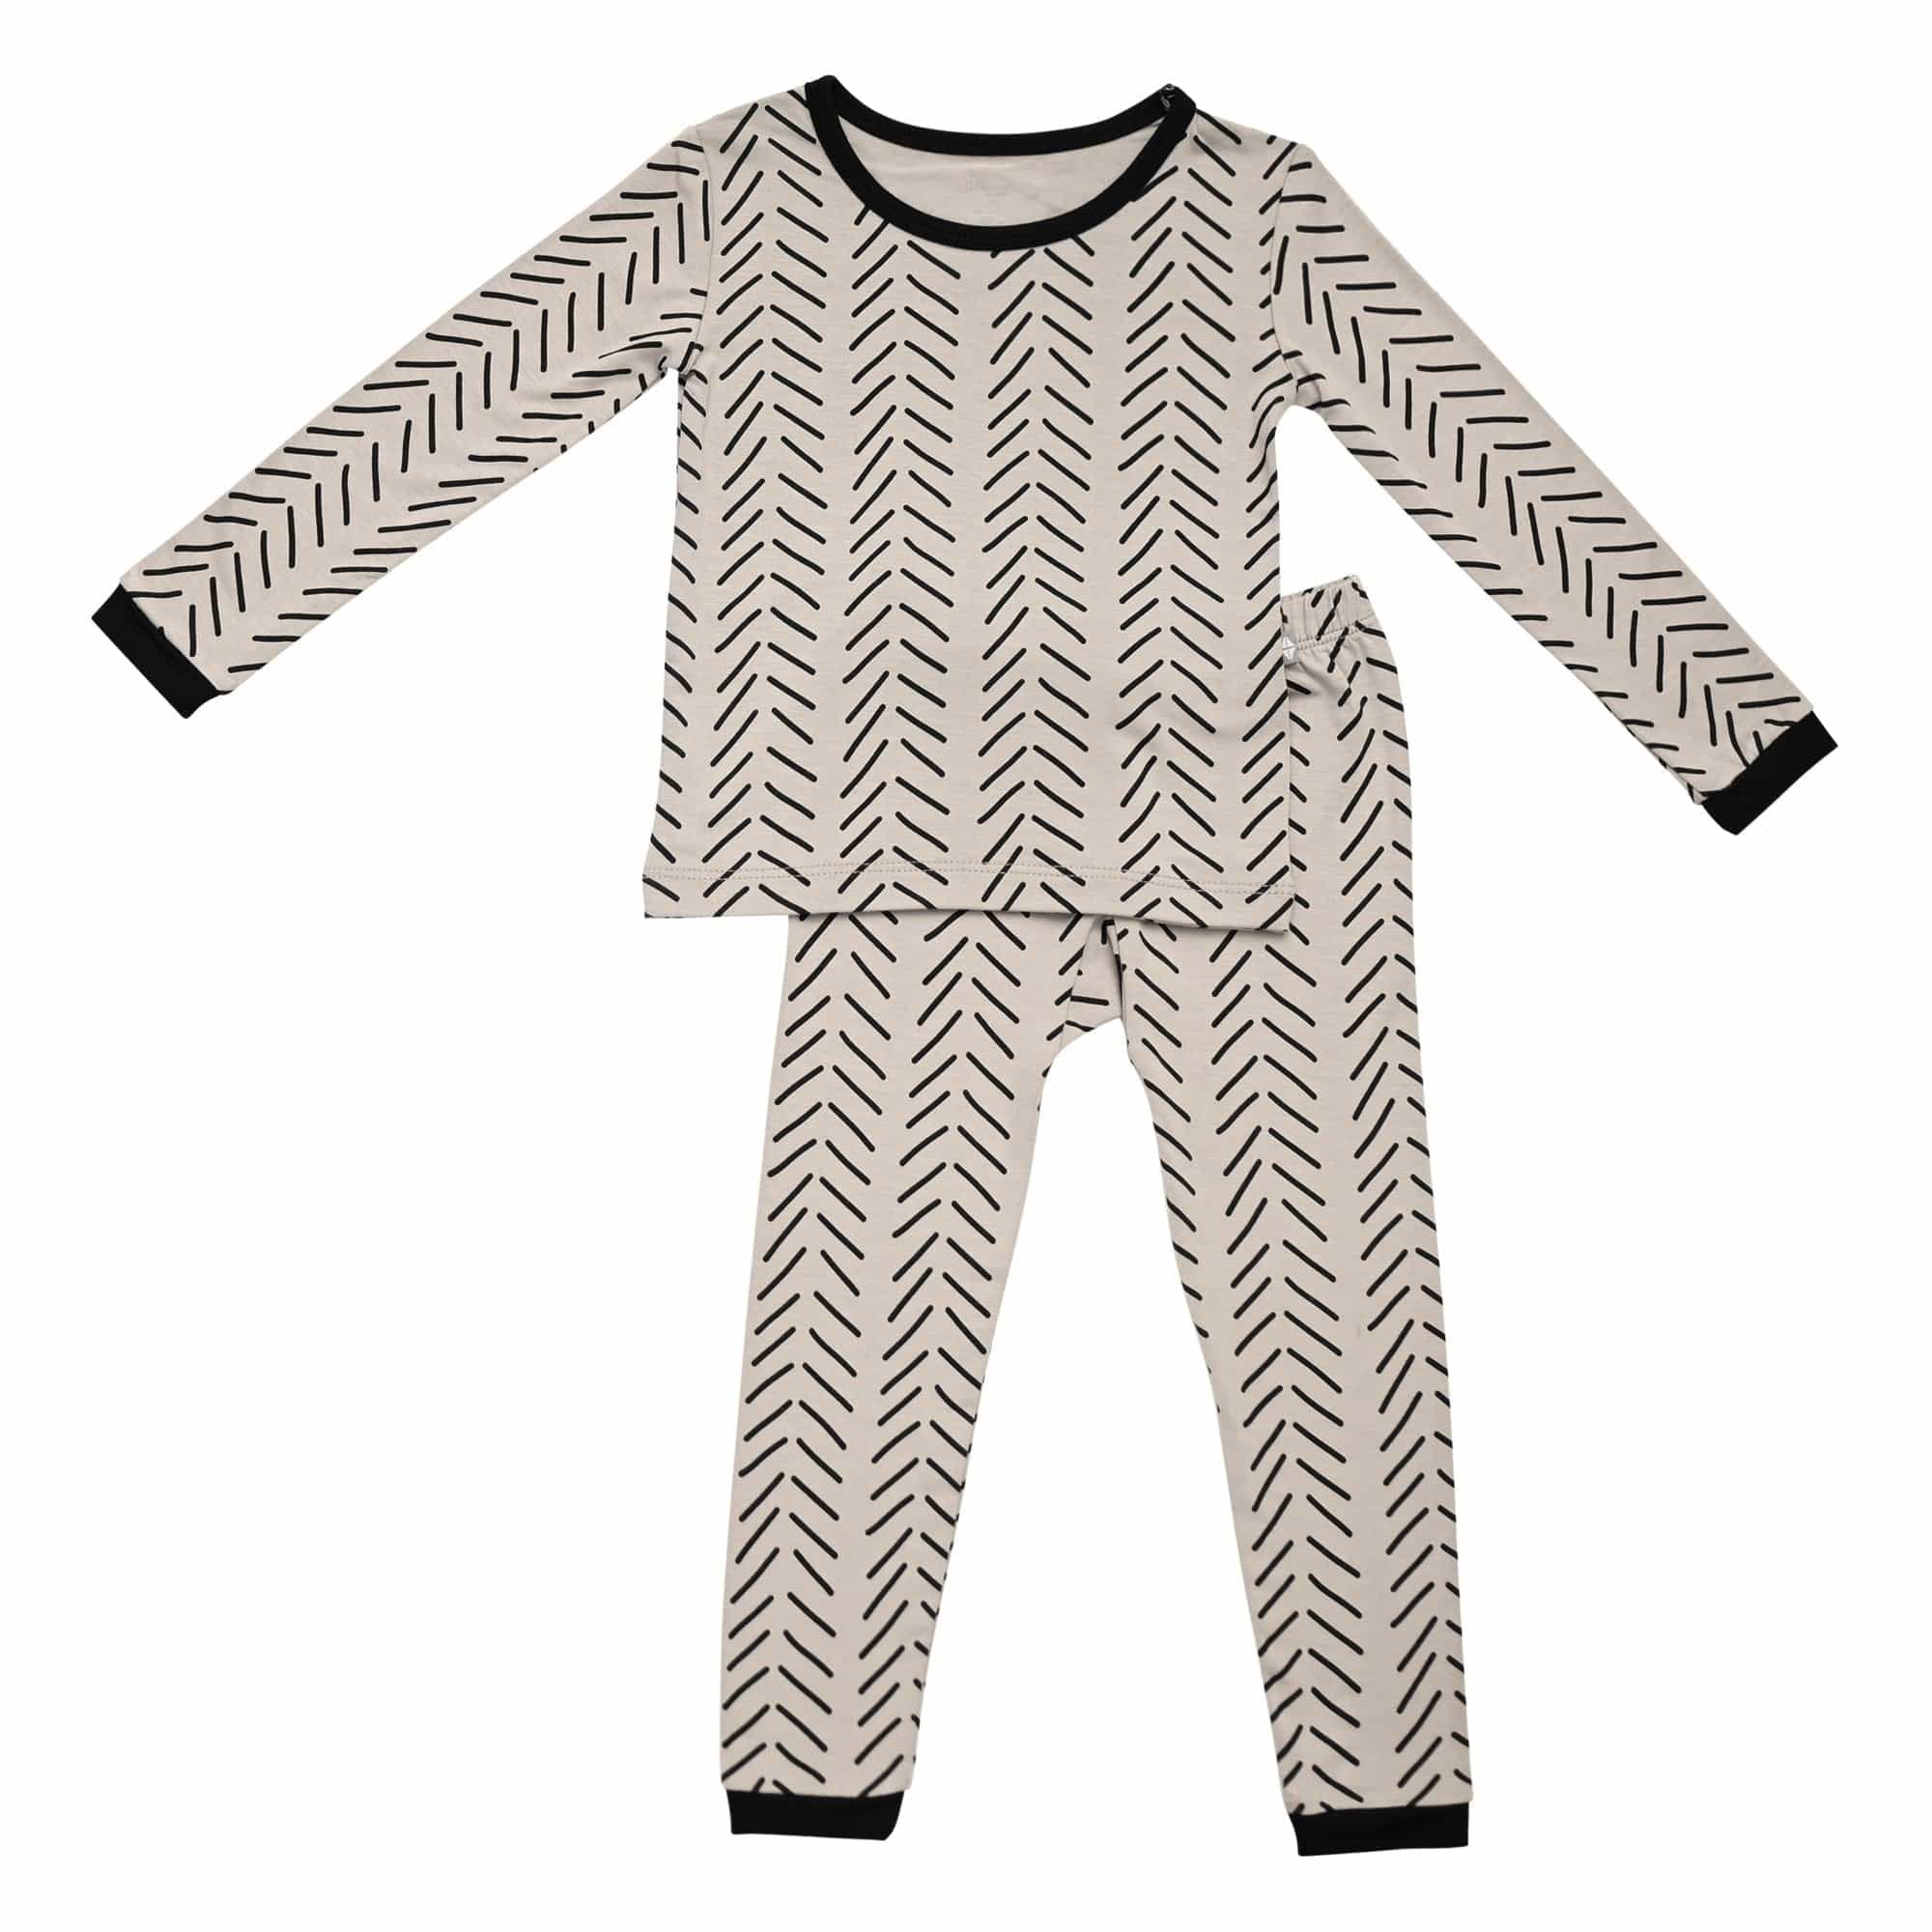 Toddler Pajama Set in Khaki Herringbone | Kyte BABY